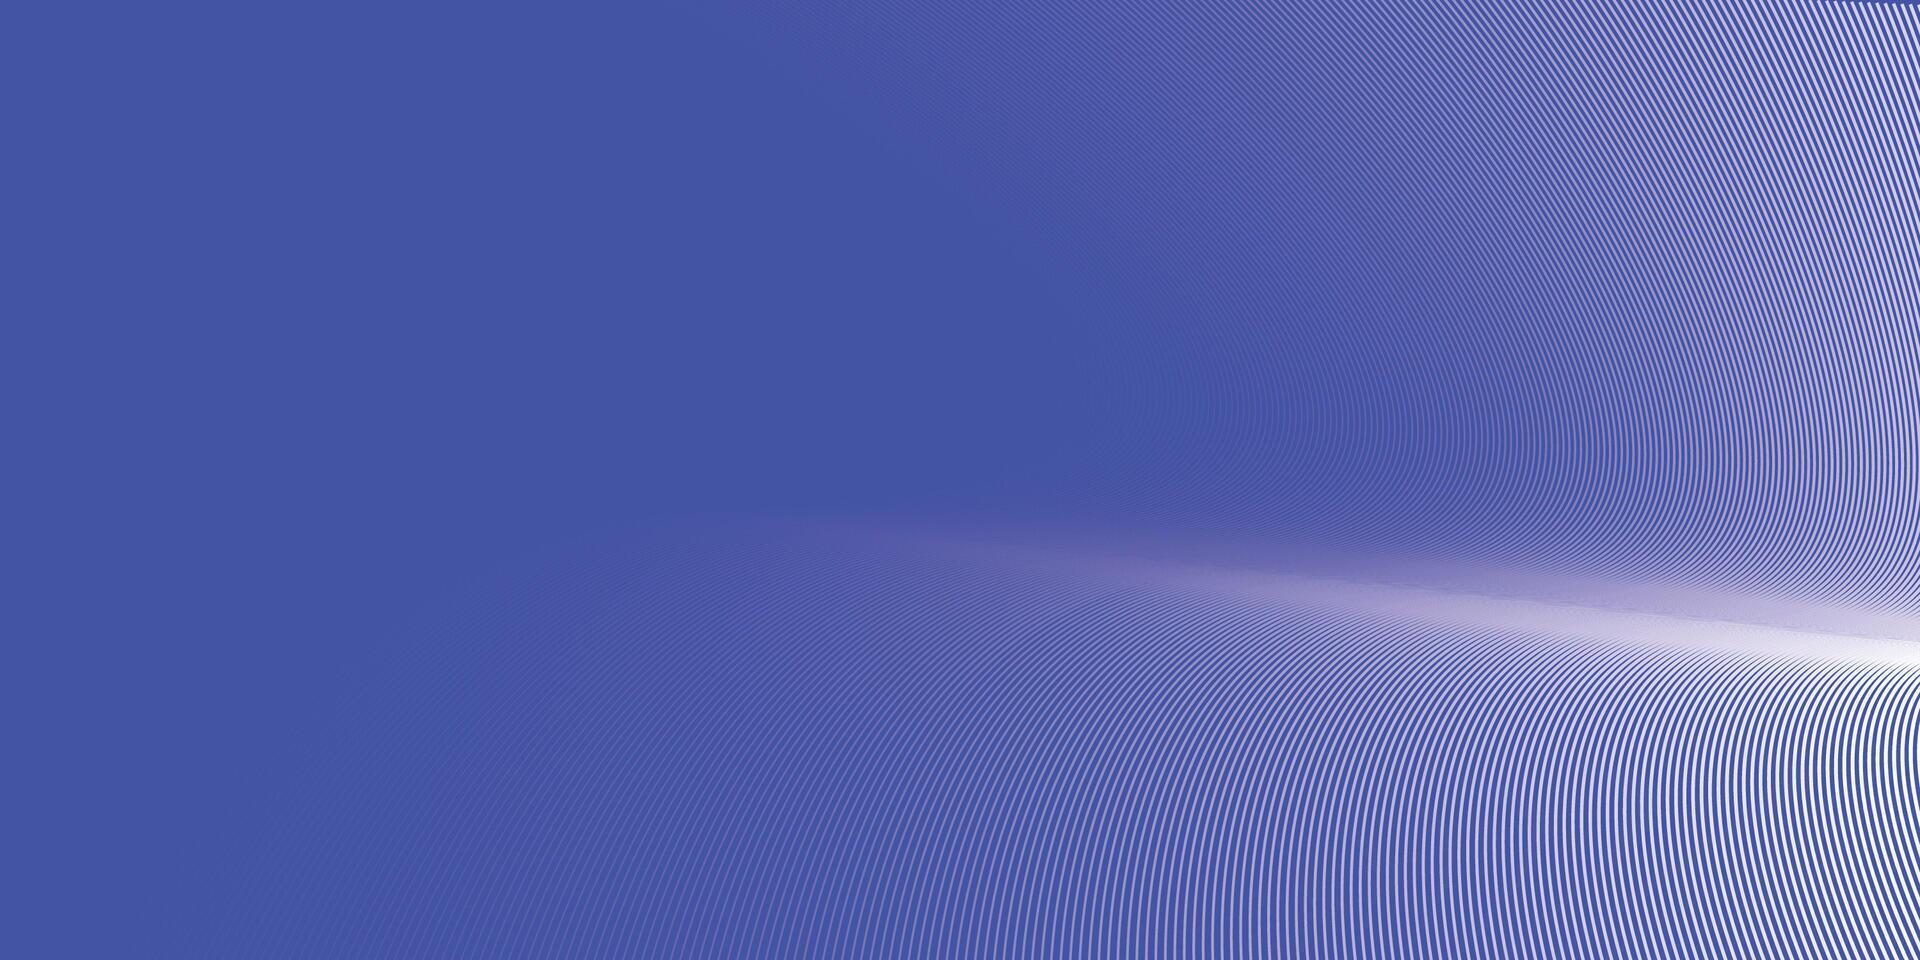 abstract blauw golvend met wazig licht gebogen lijnen achtergrond vector